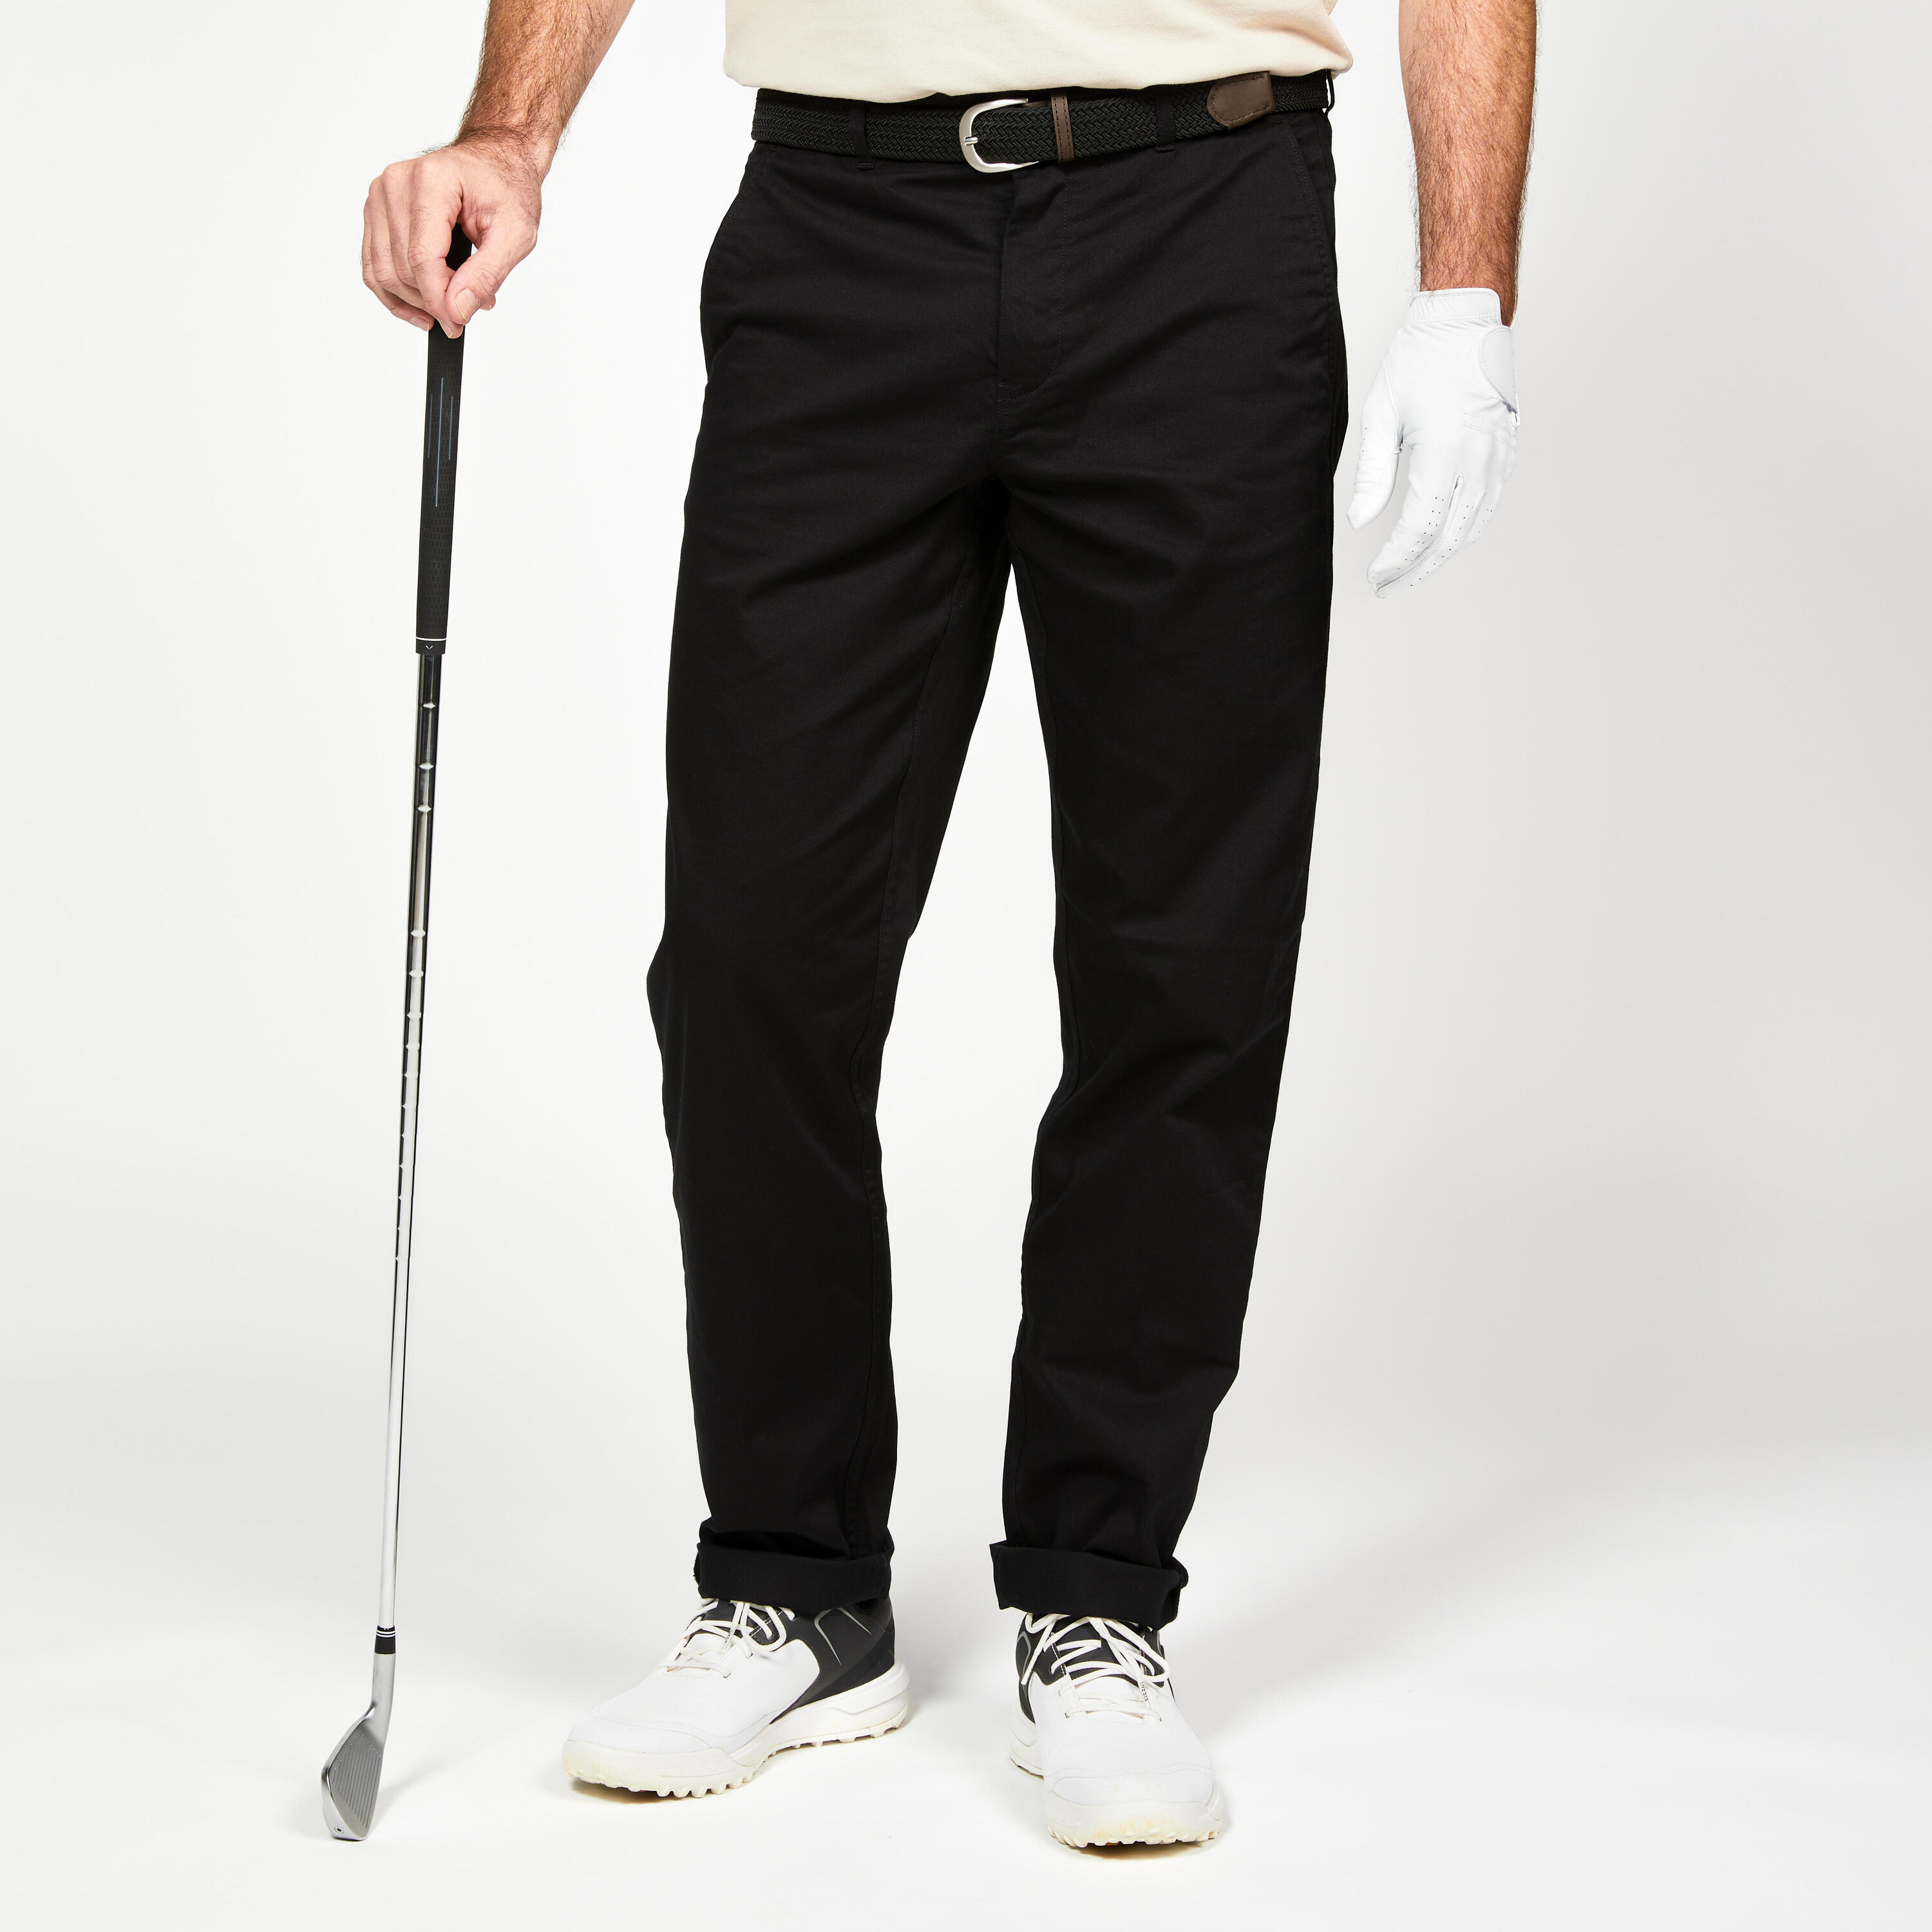 INESIS Men's Golf Chino Trousers Cotton - MW500 Black